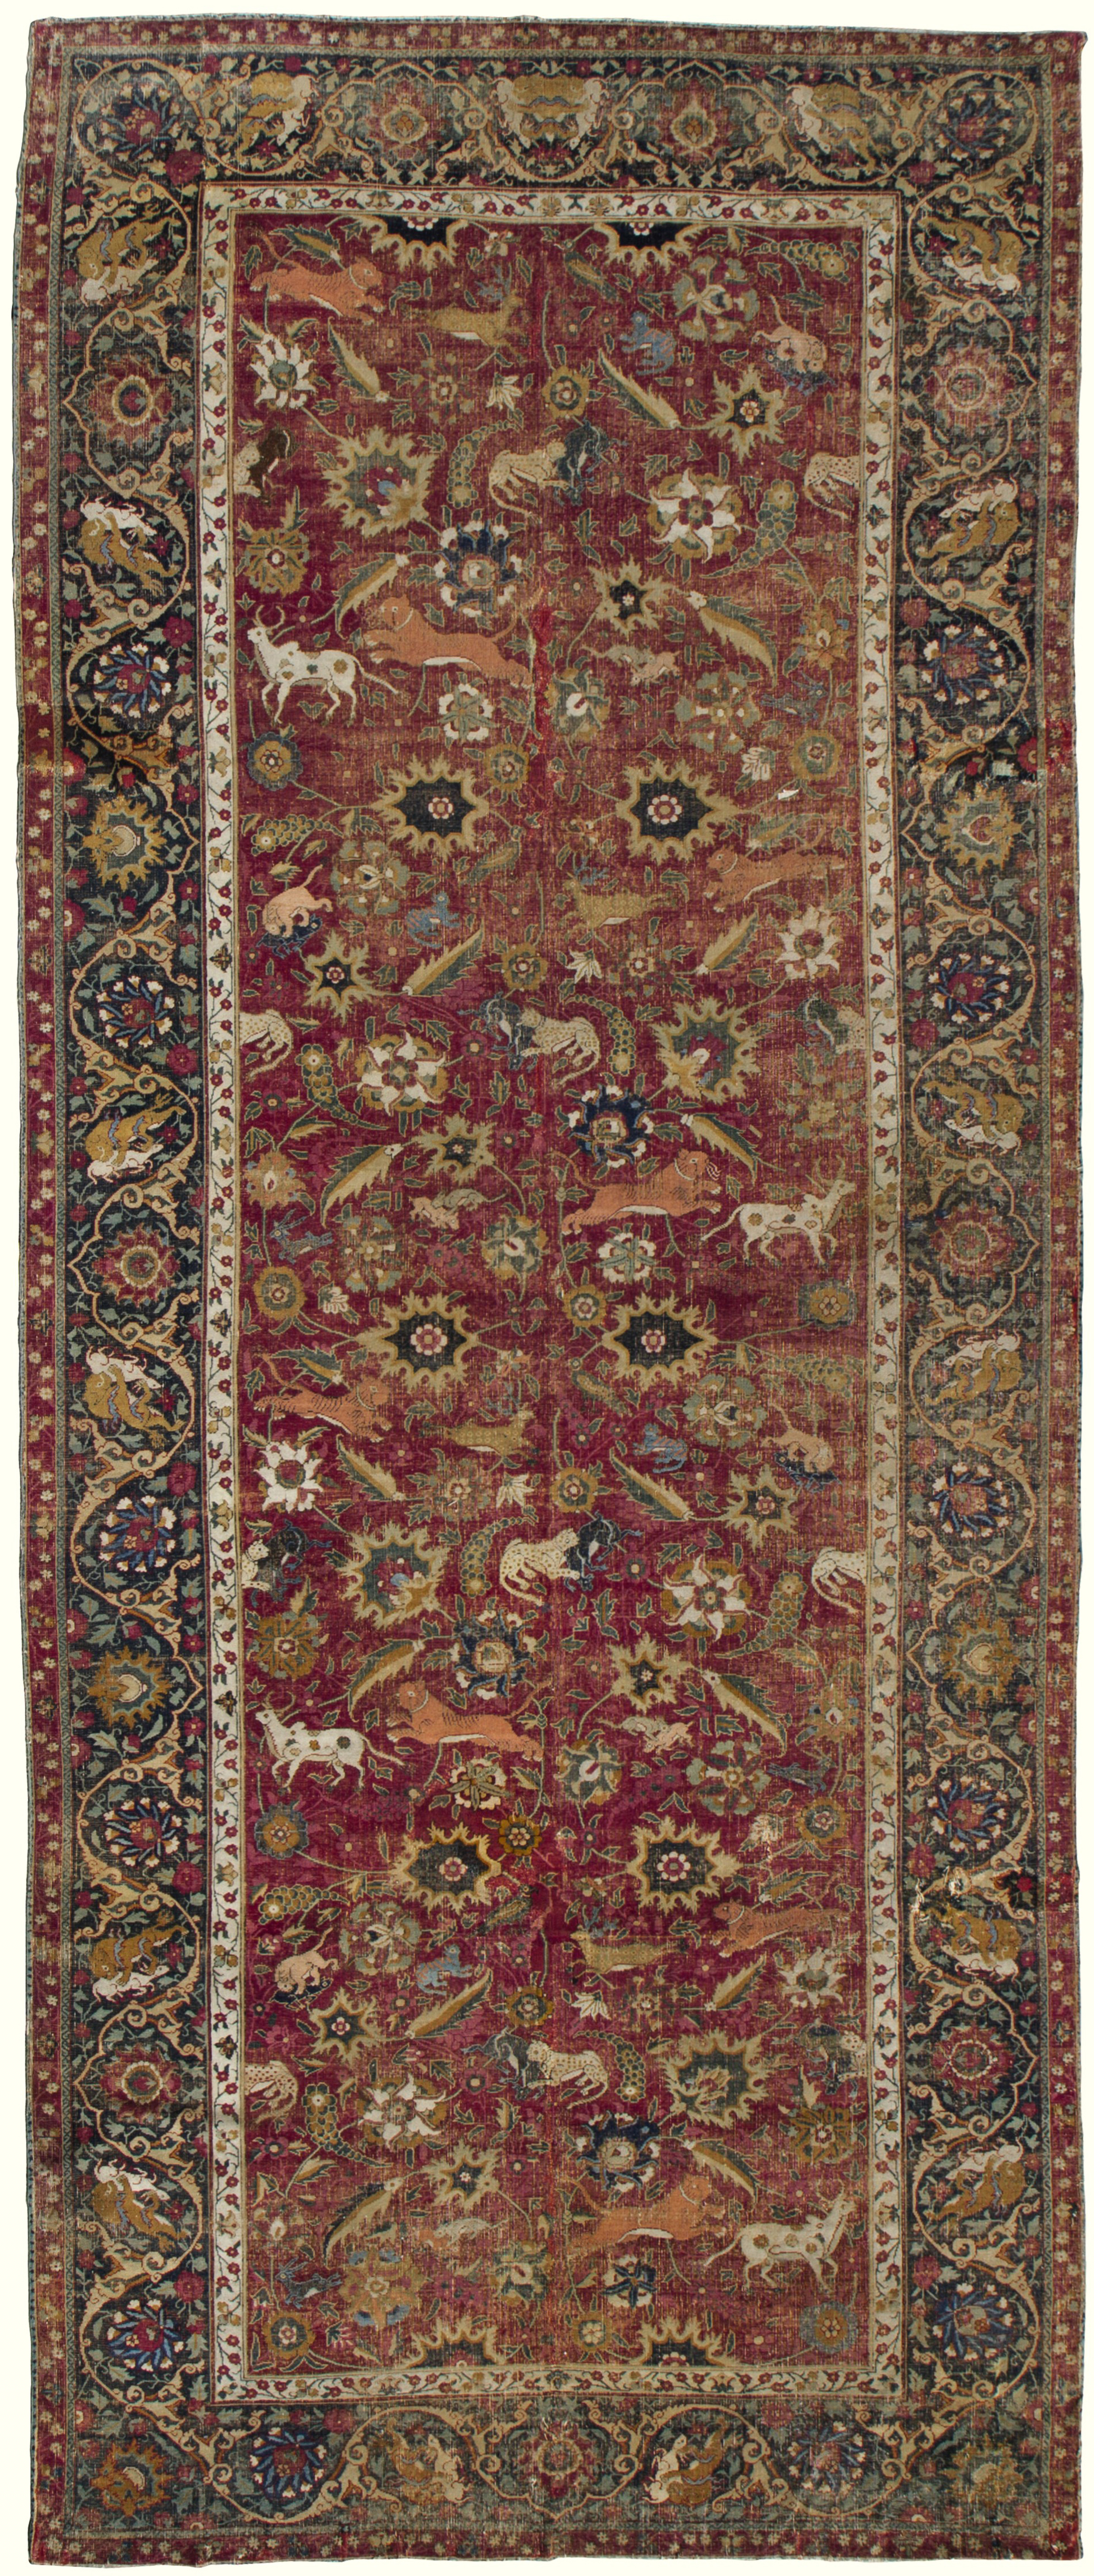 Lot 23, Mughal hunting carpet